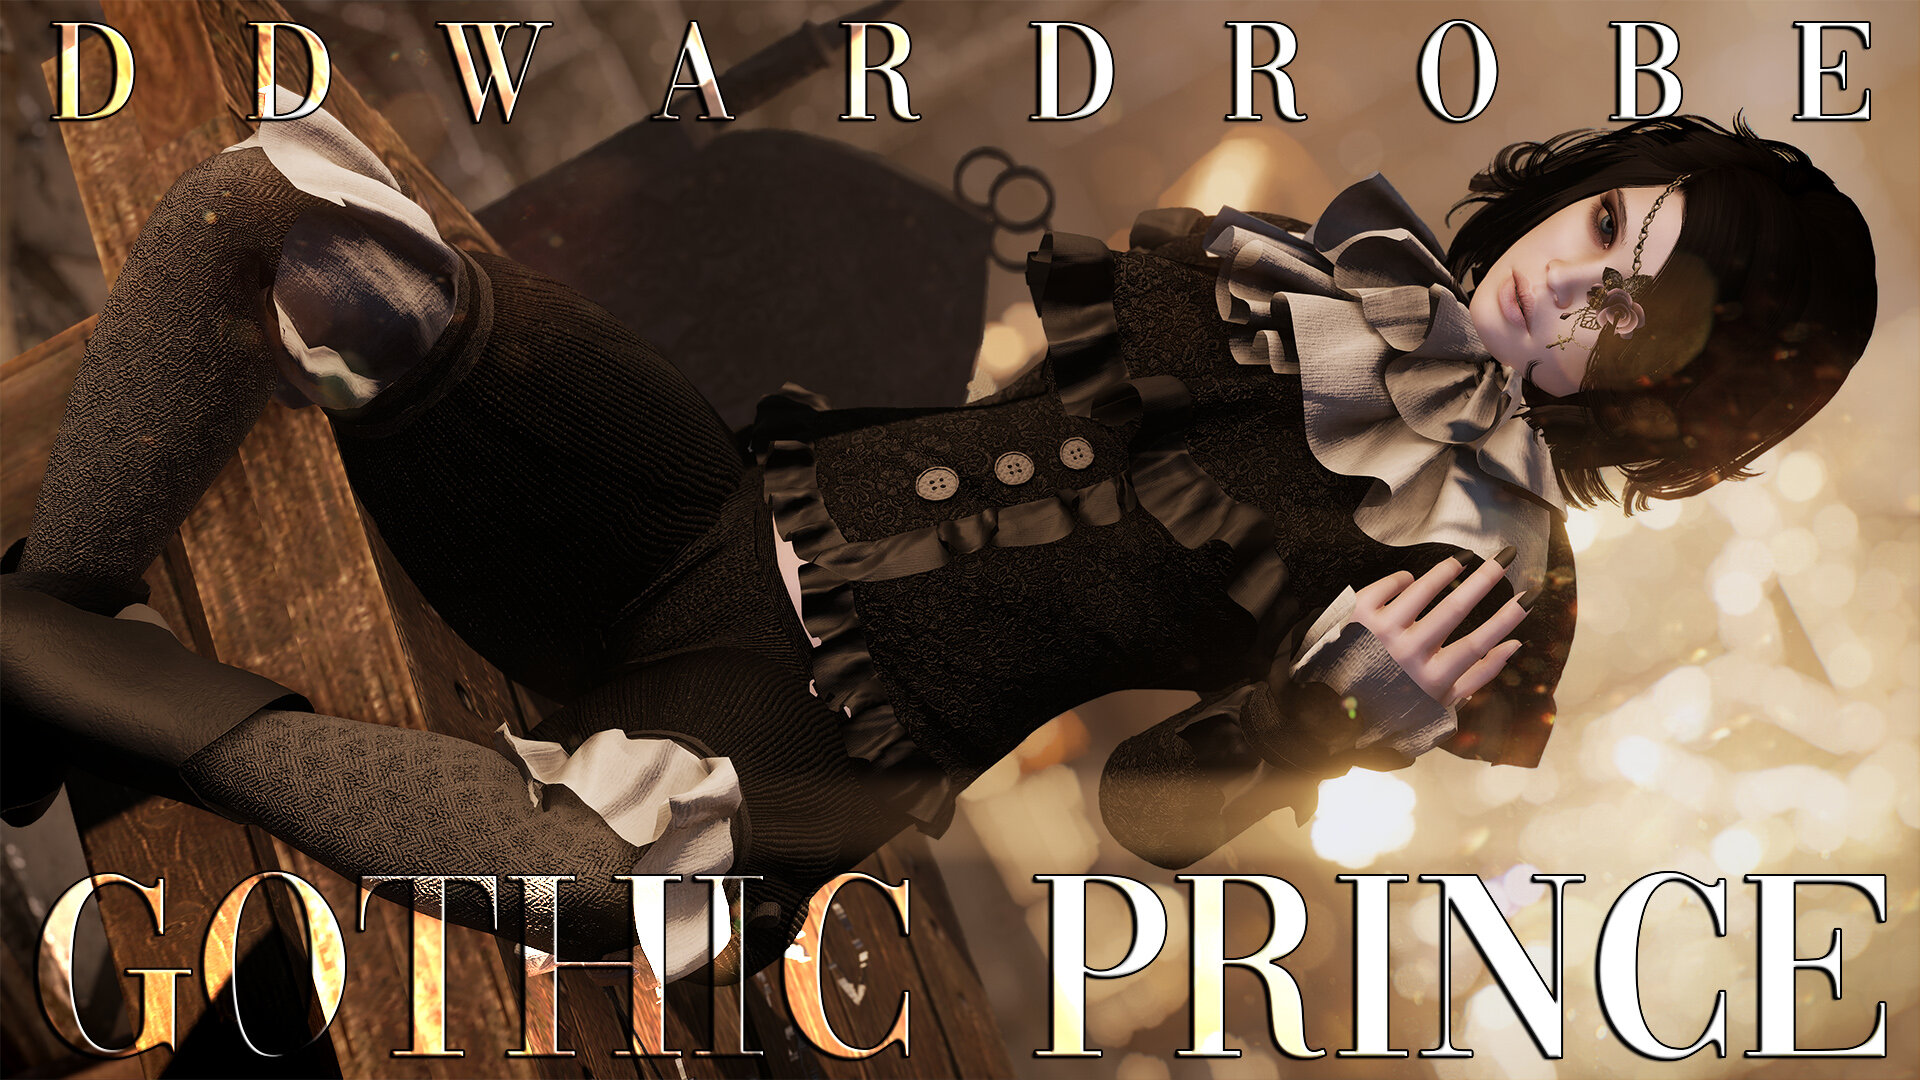 DDWardrobe - Gothic Prince (UNP-CBBE)